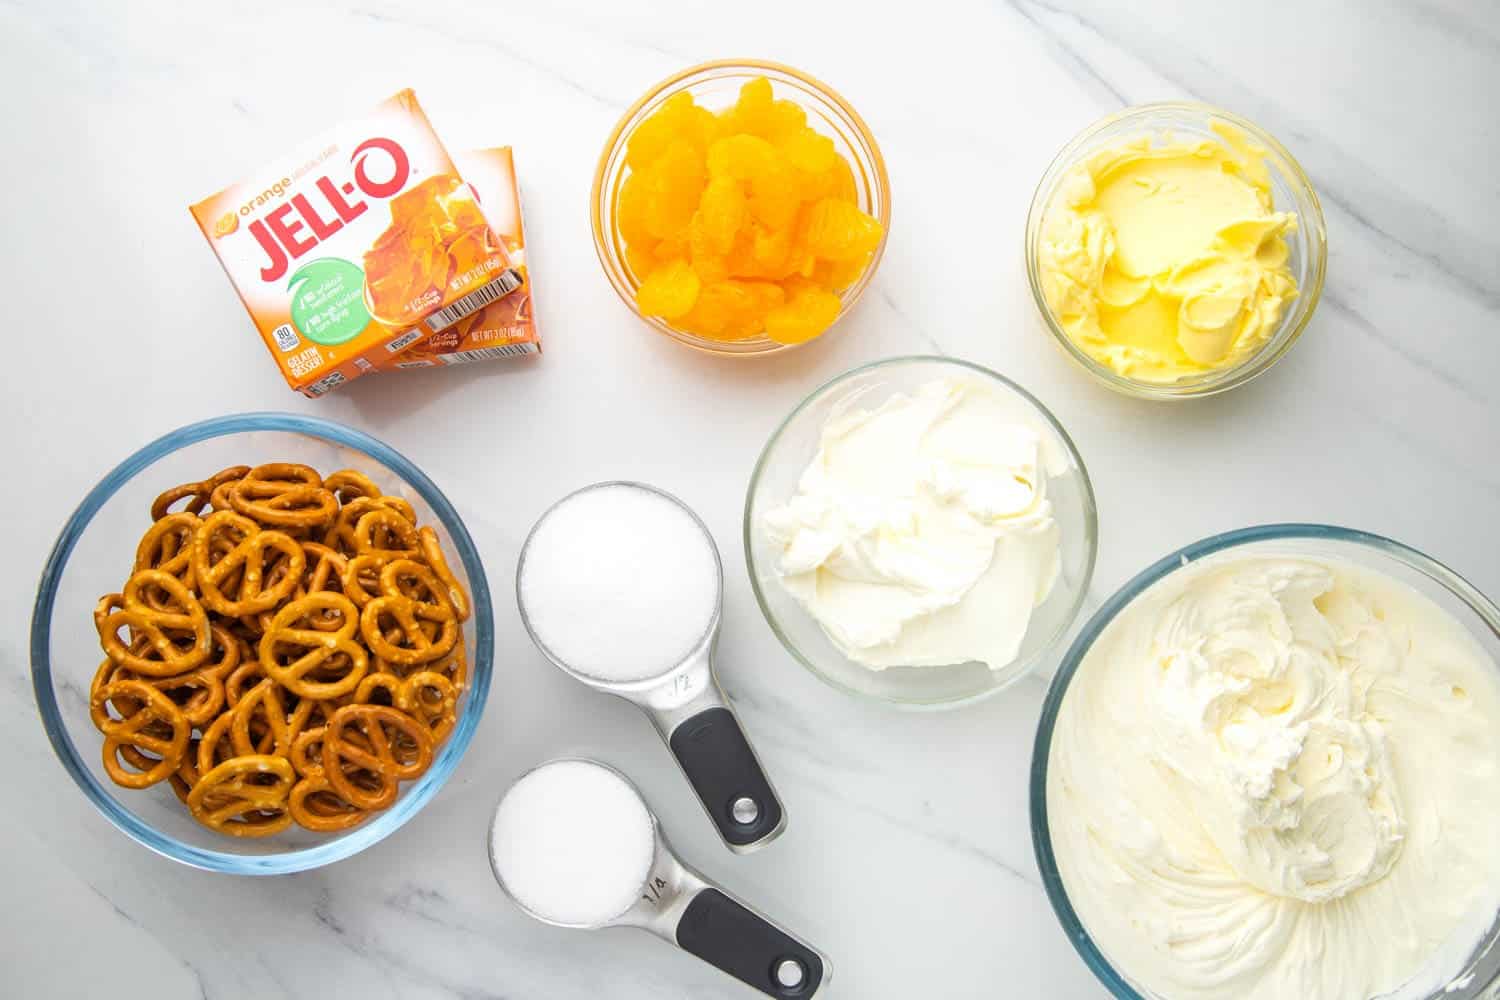 the ingredients needed to make pretzel salad with mandarin oranges and jello